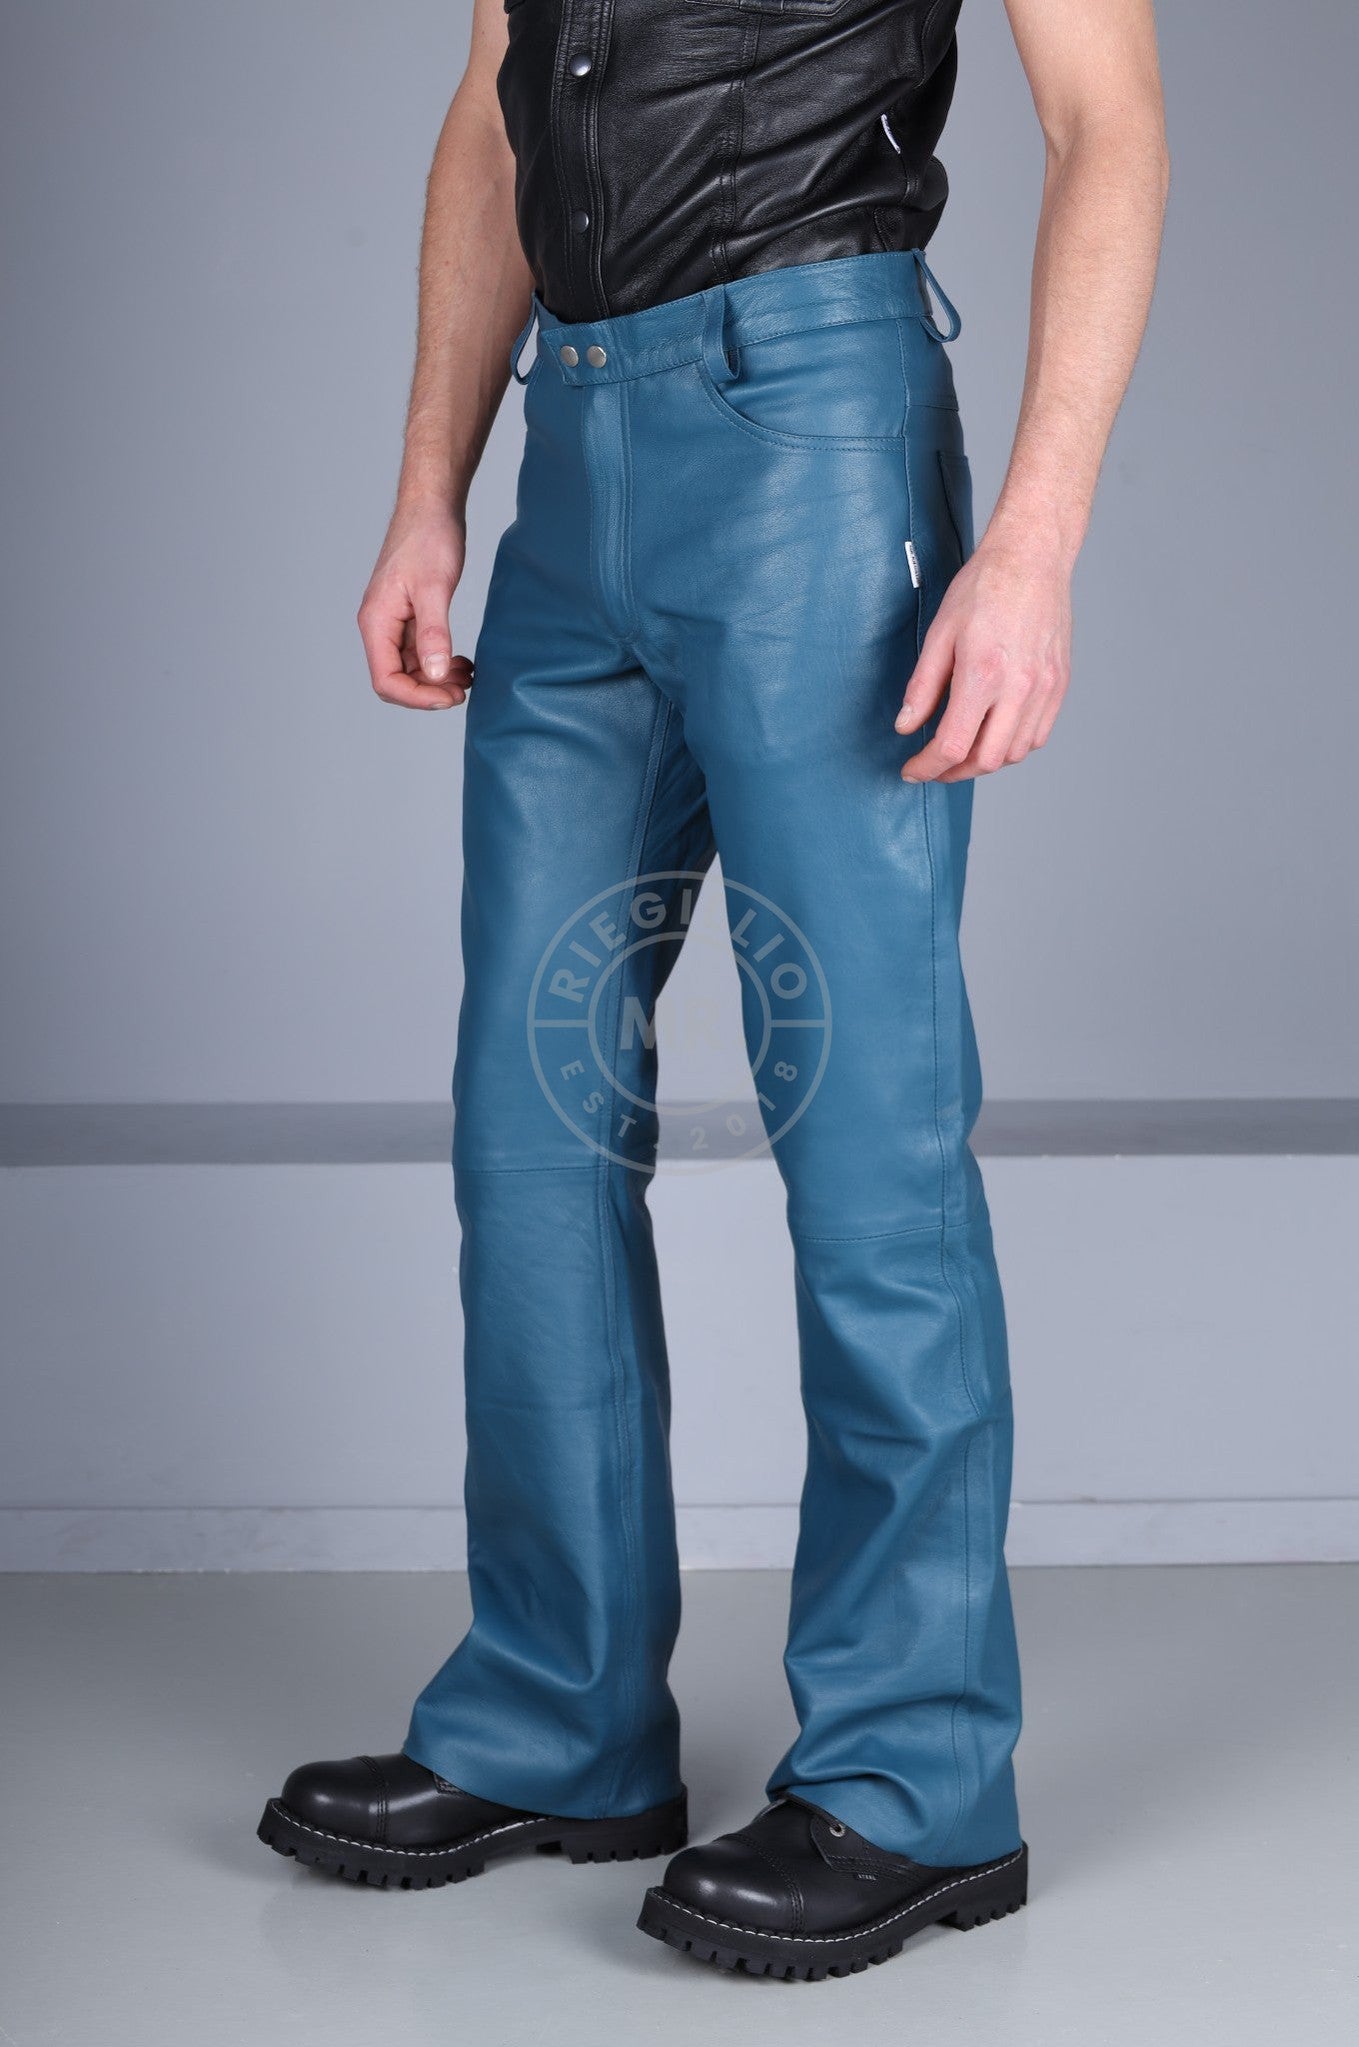 Jeans Blue Leather Bootcut Pants at MR. Riegillio